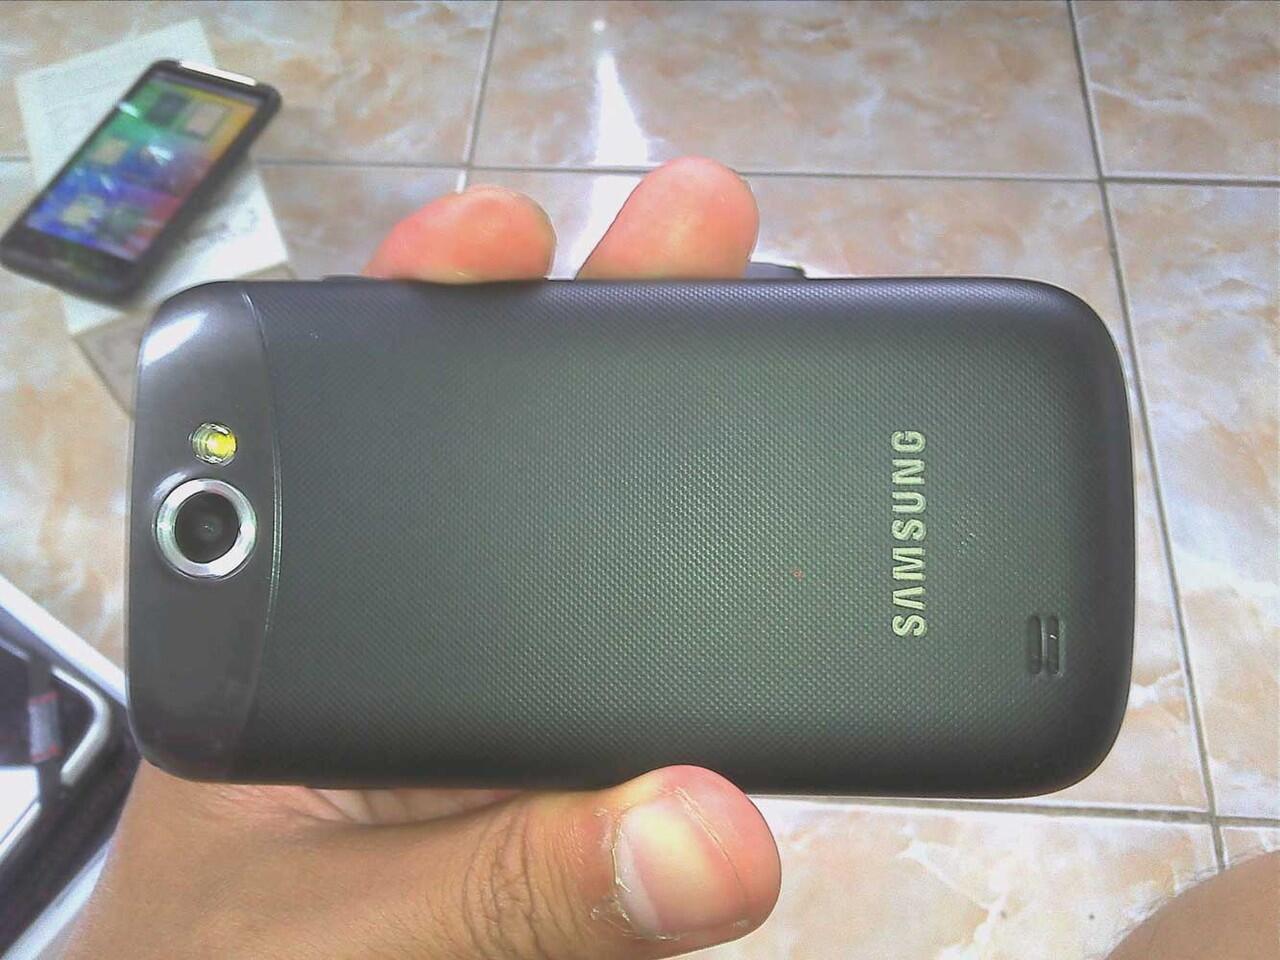 Samsung Galaxy Wonder Sejutaan Fullset!!